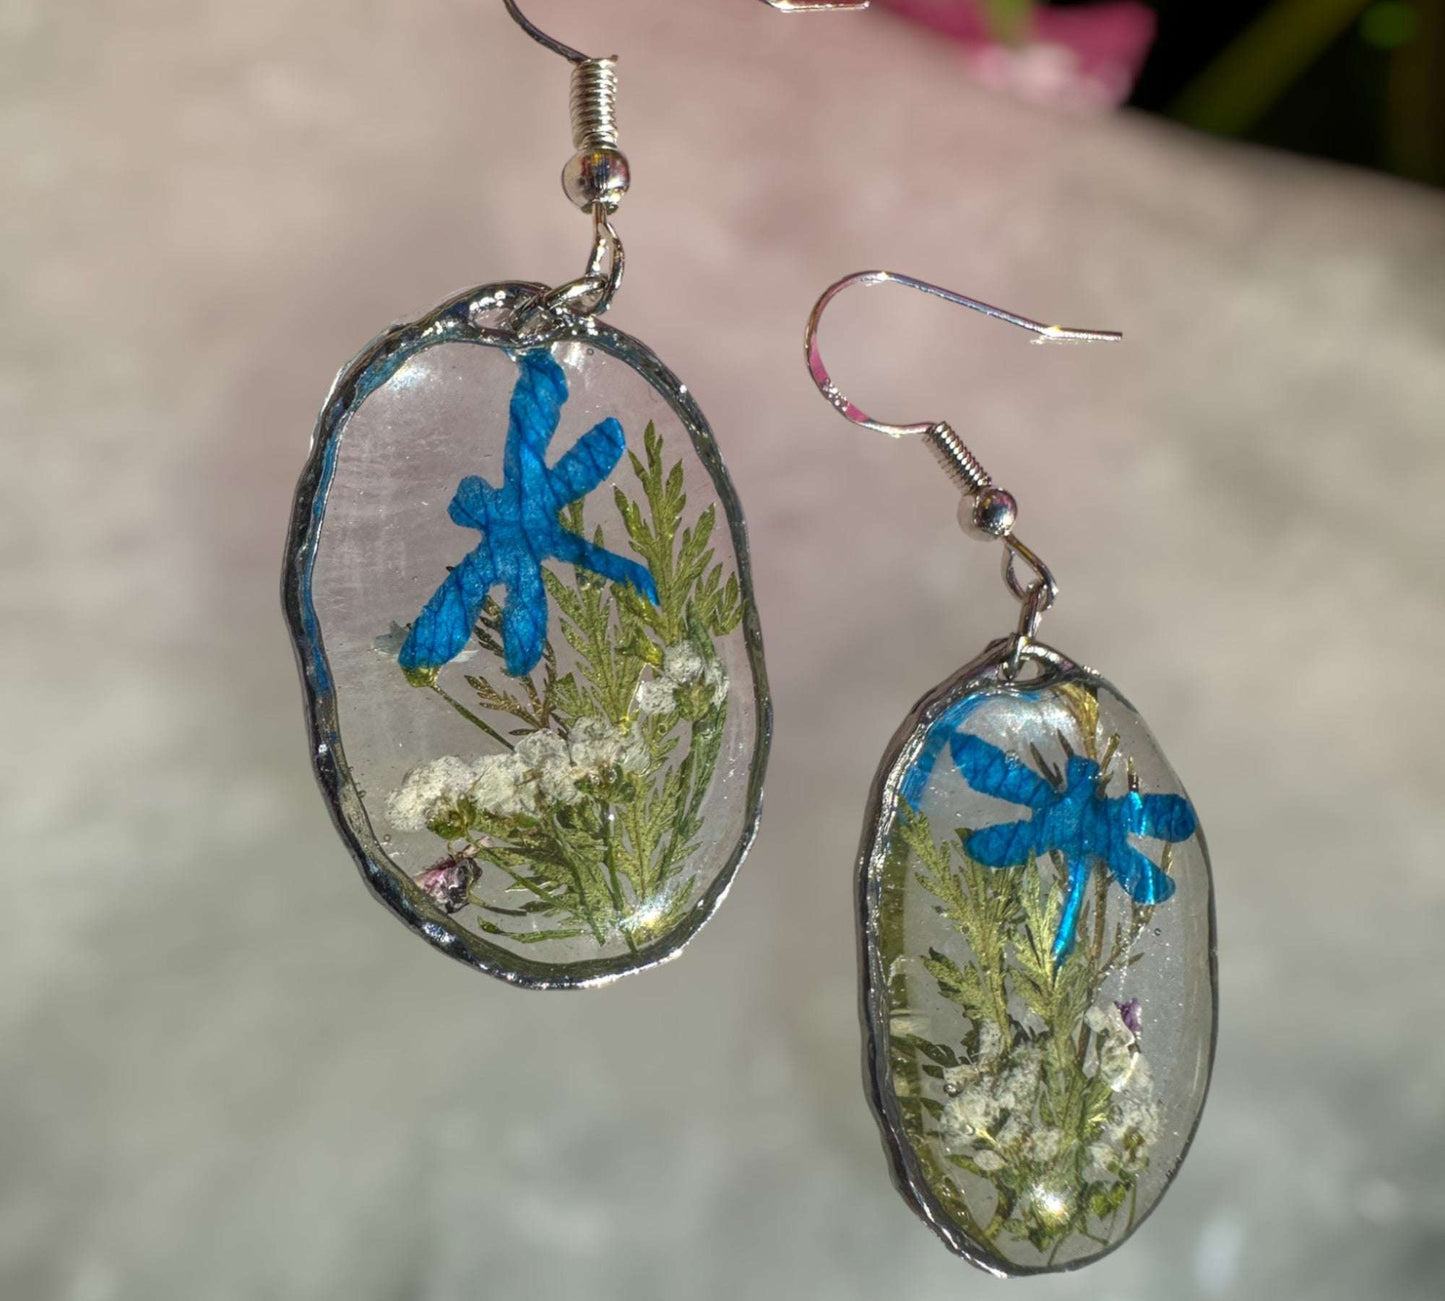 Enchanted Dragonfly Garden Earrings - Handmade Pressed Flower Earrings